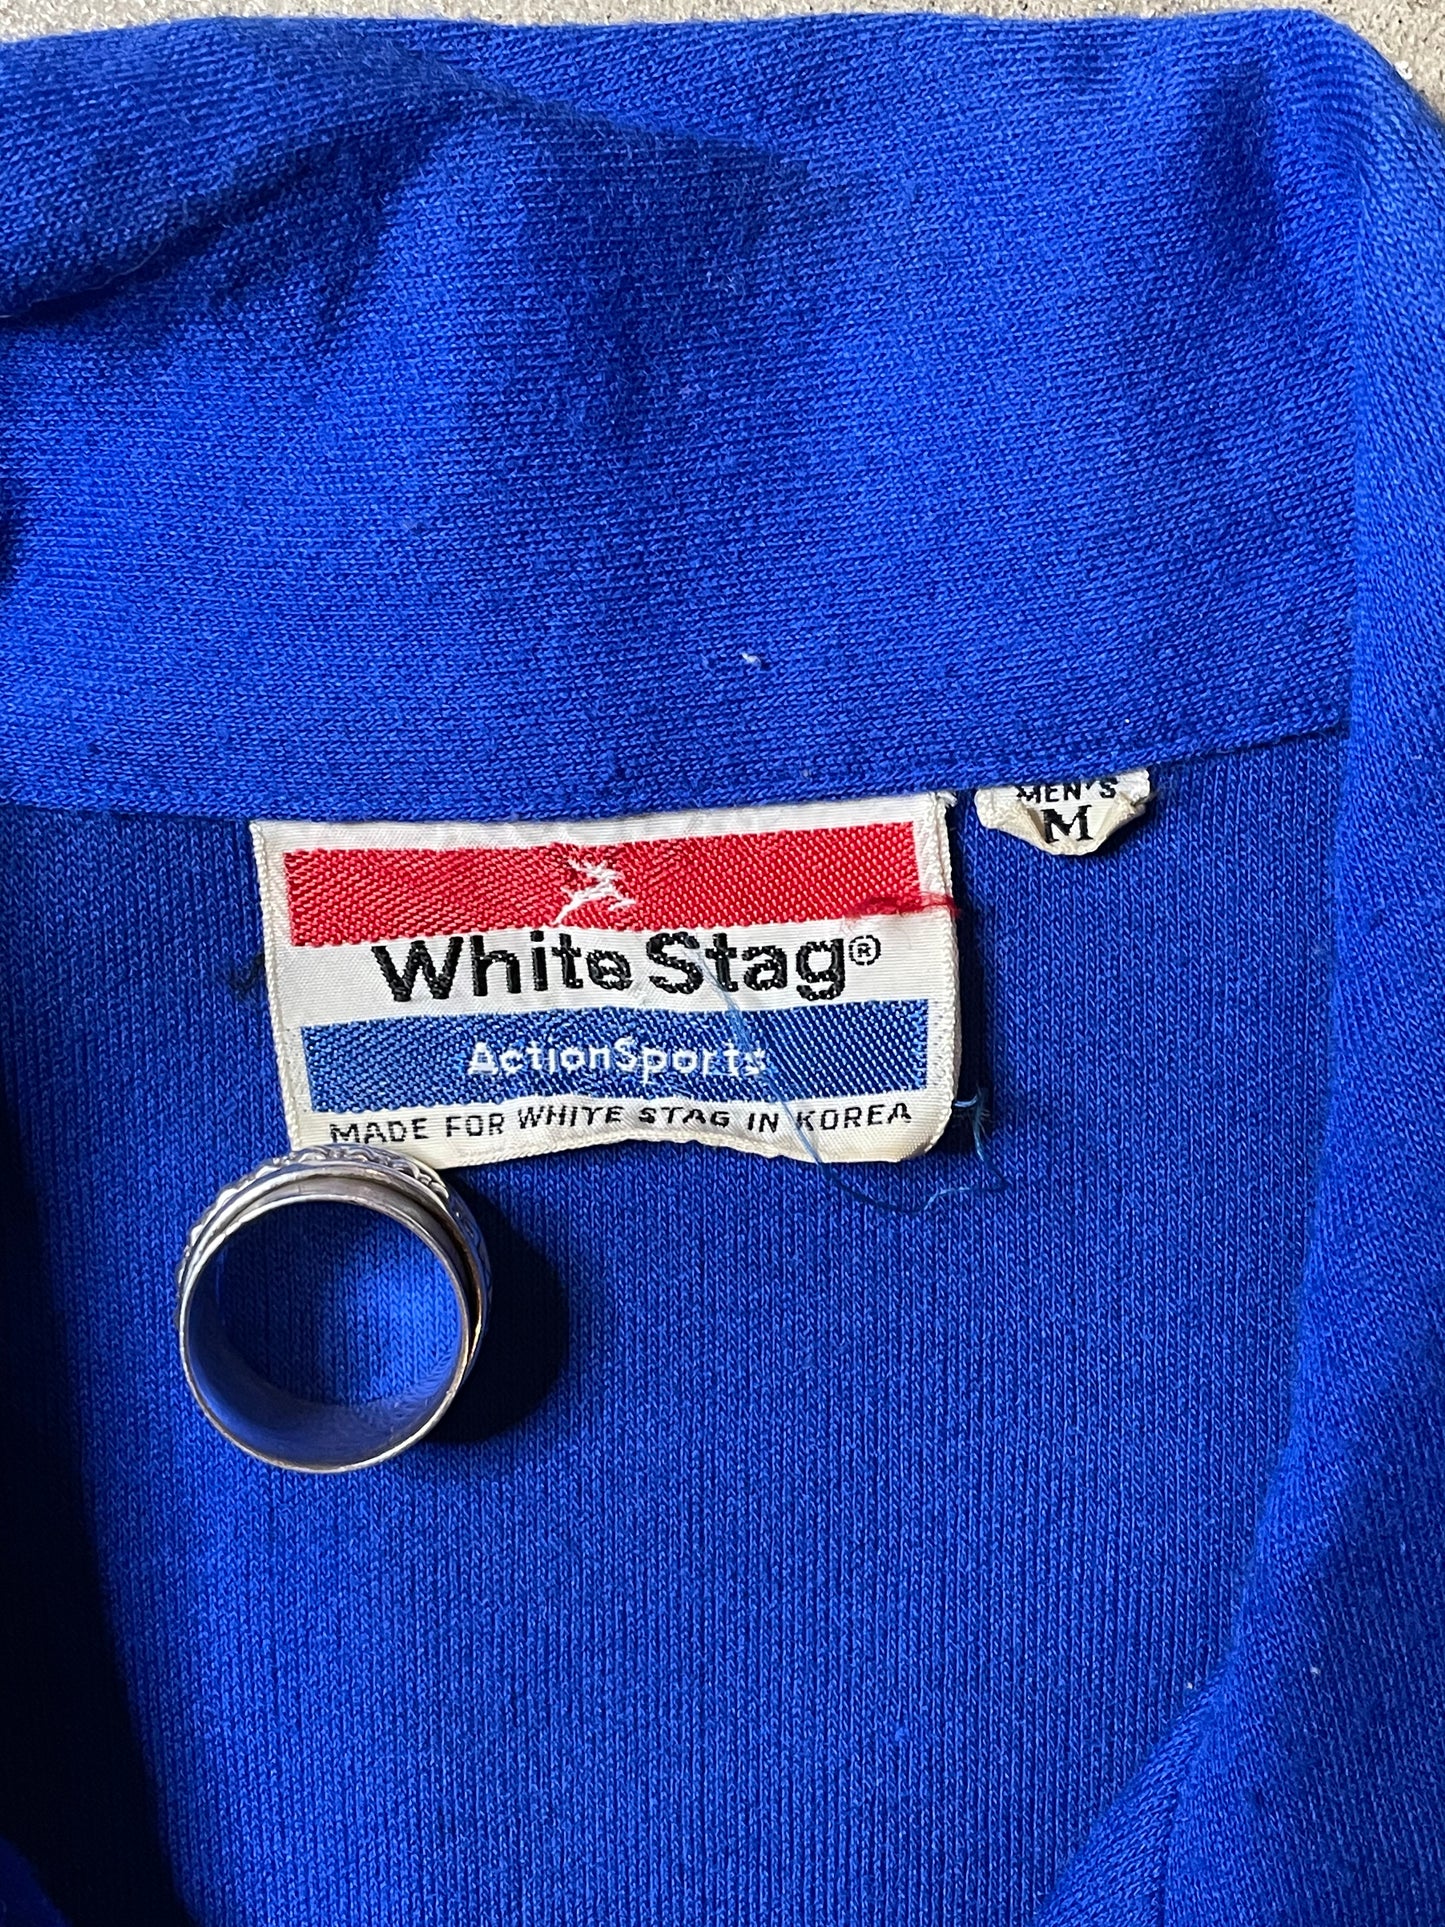 1970s White Stag Zip Up Sweatshirt